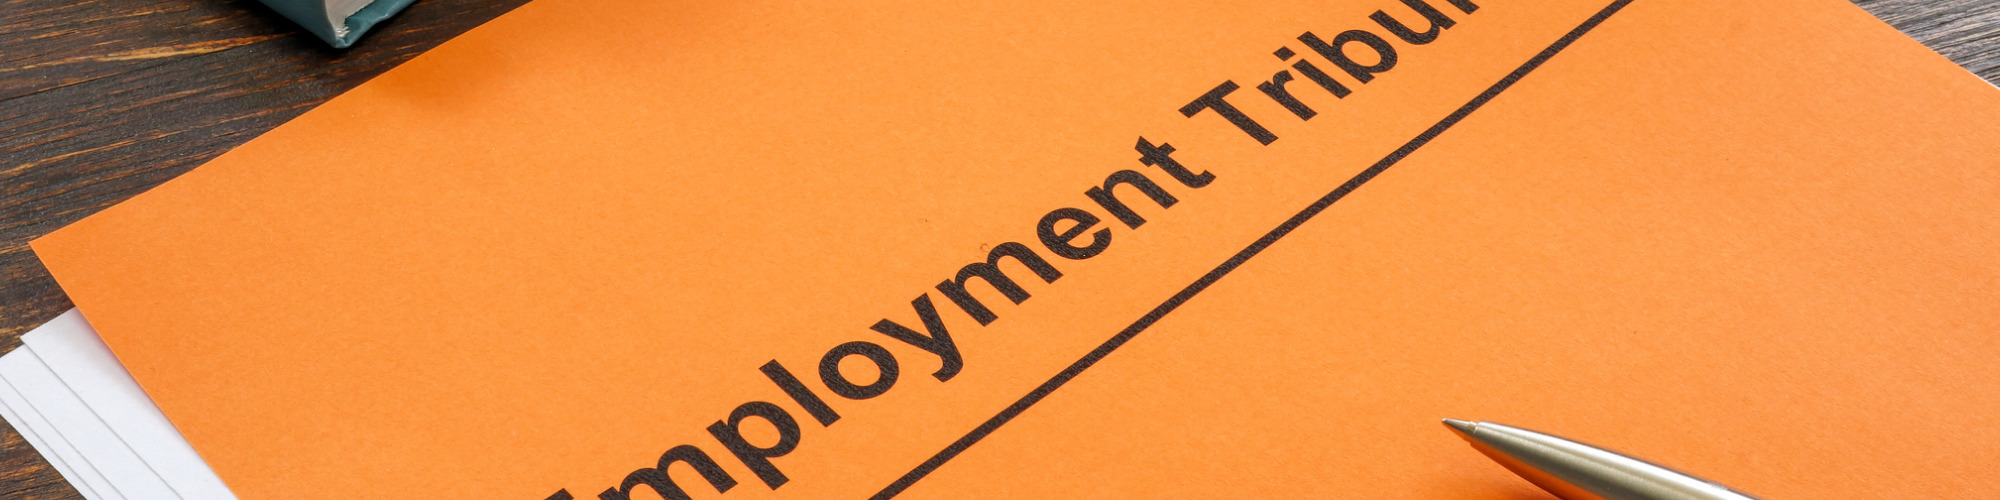 Employment Tribunal Documentation - How to Improve Your Drafting Skills